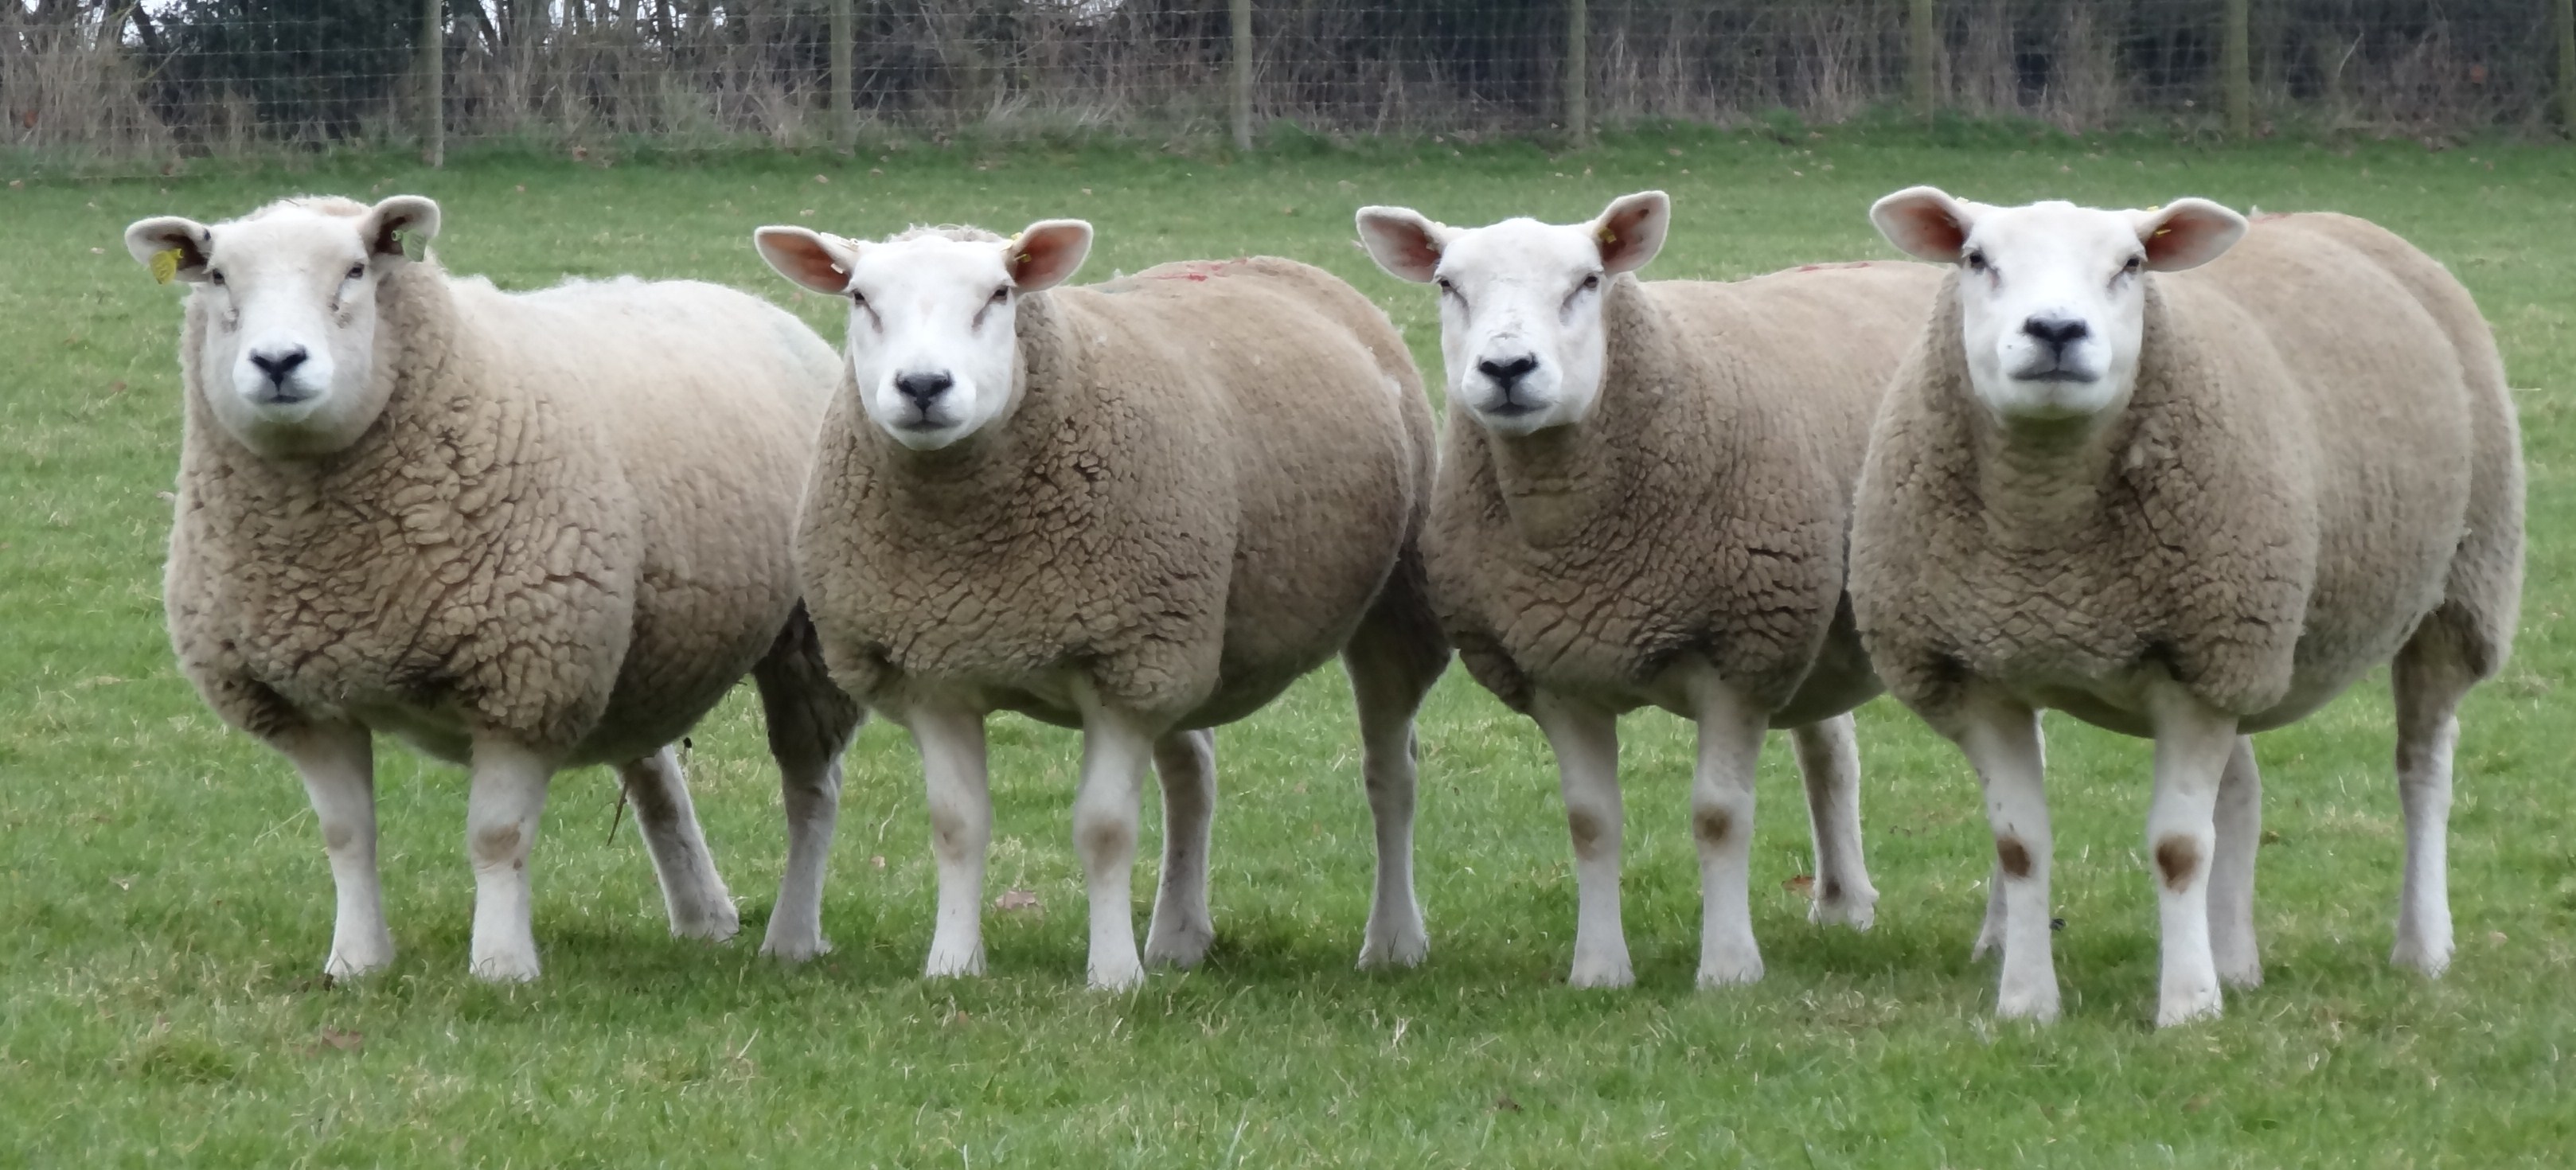 2015 in lamb ewe purchases